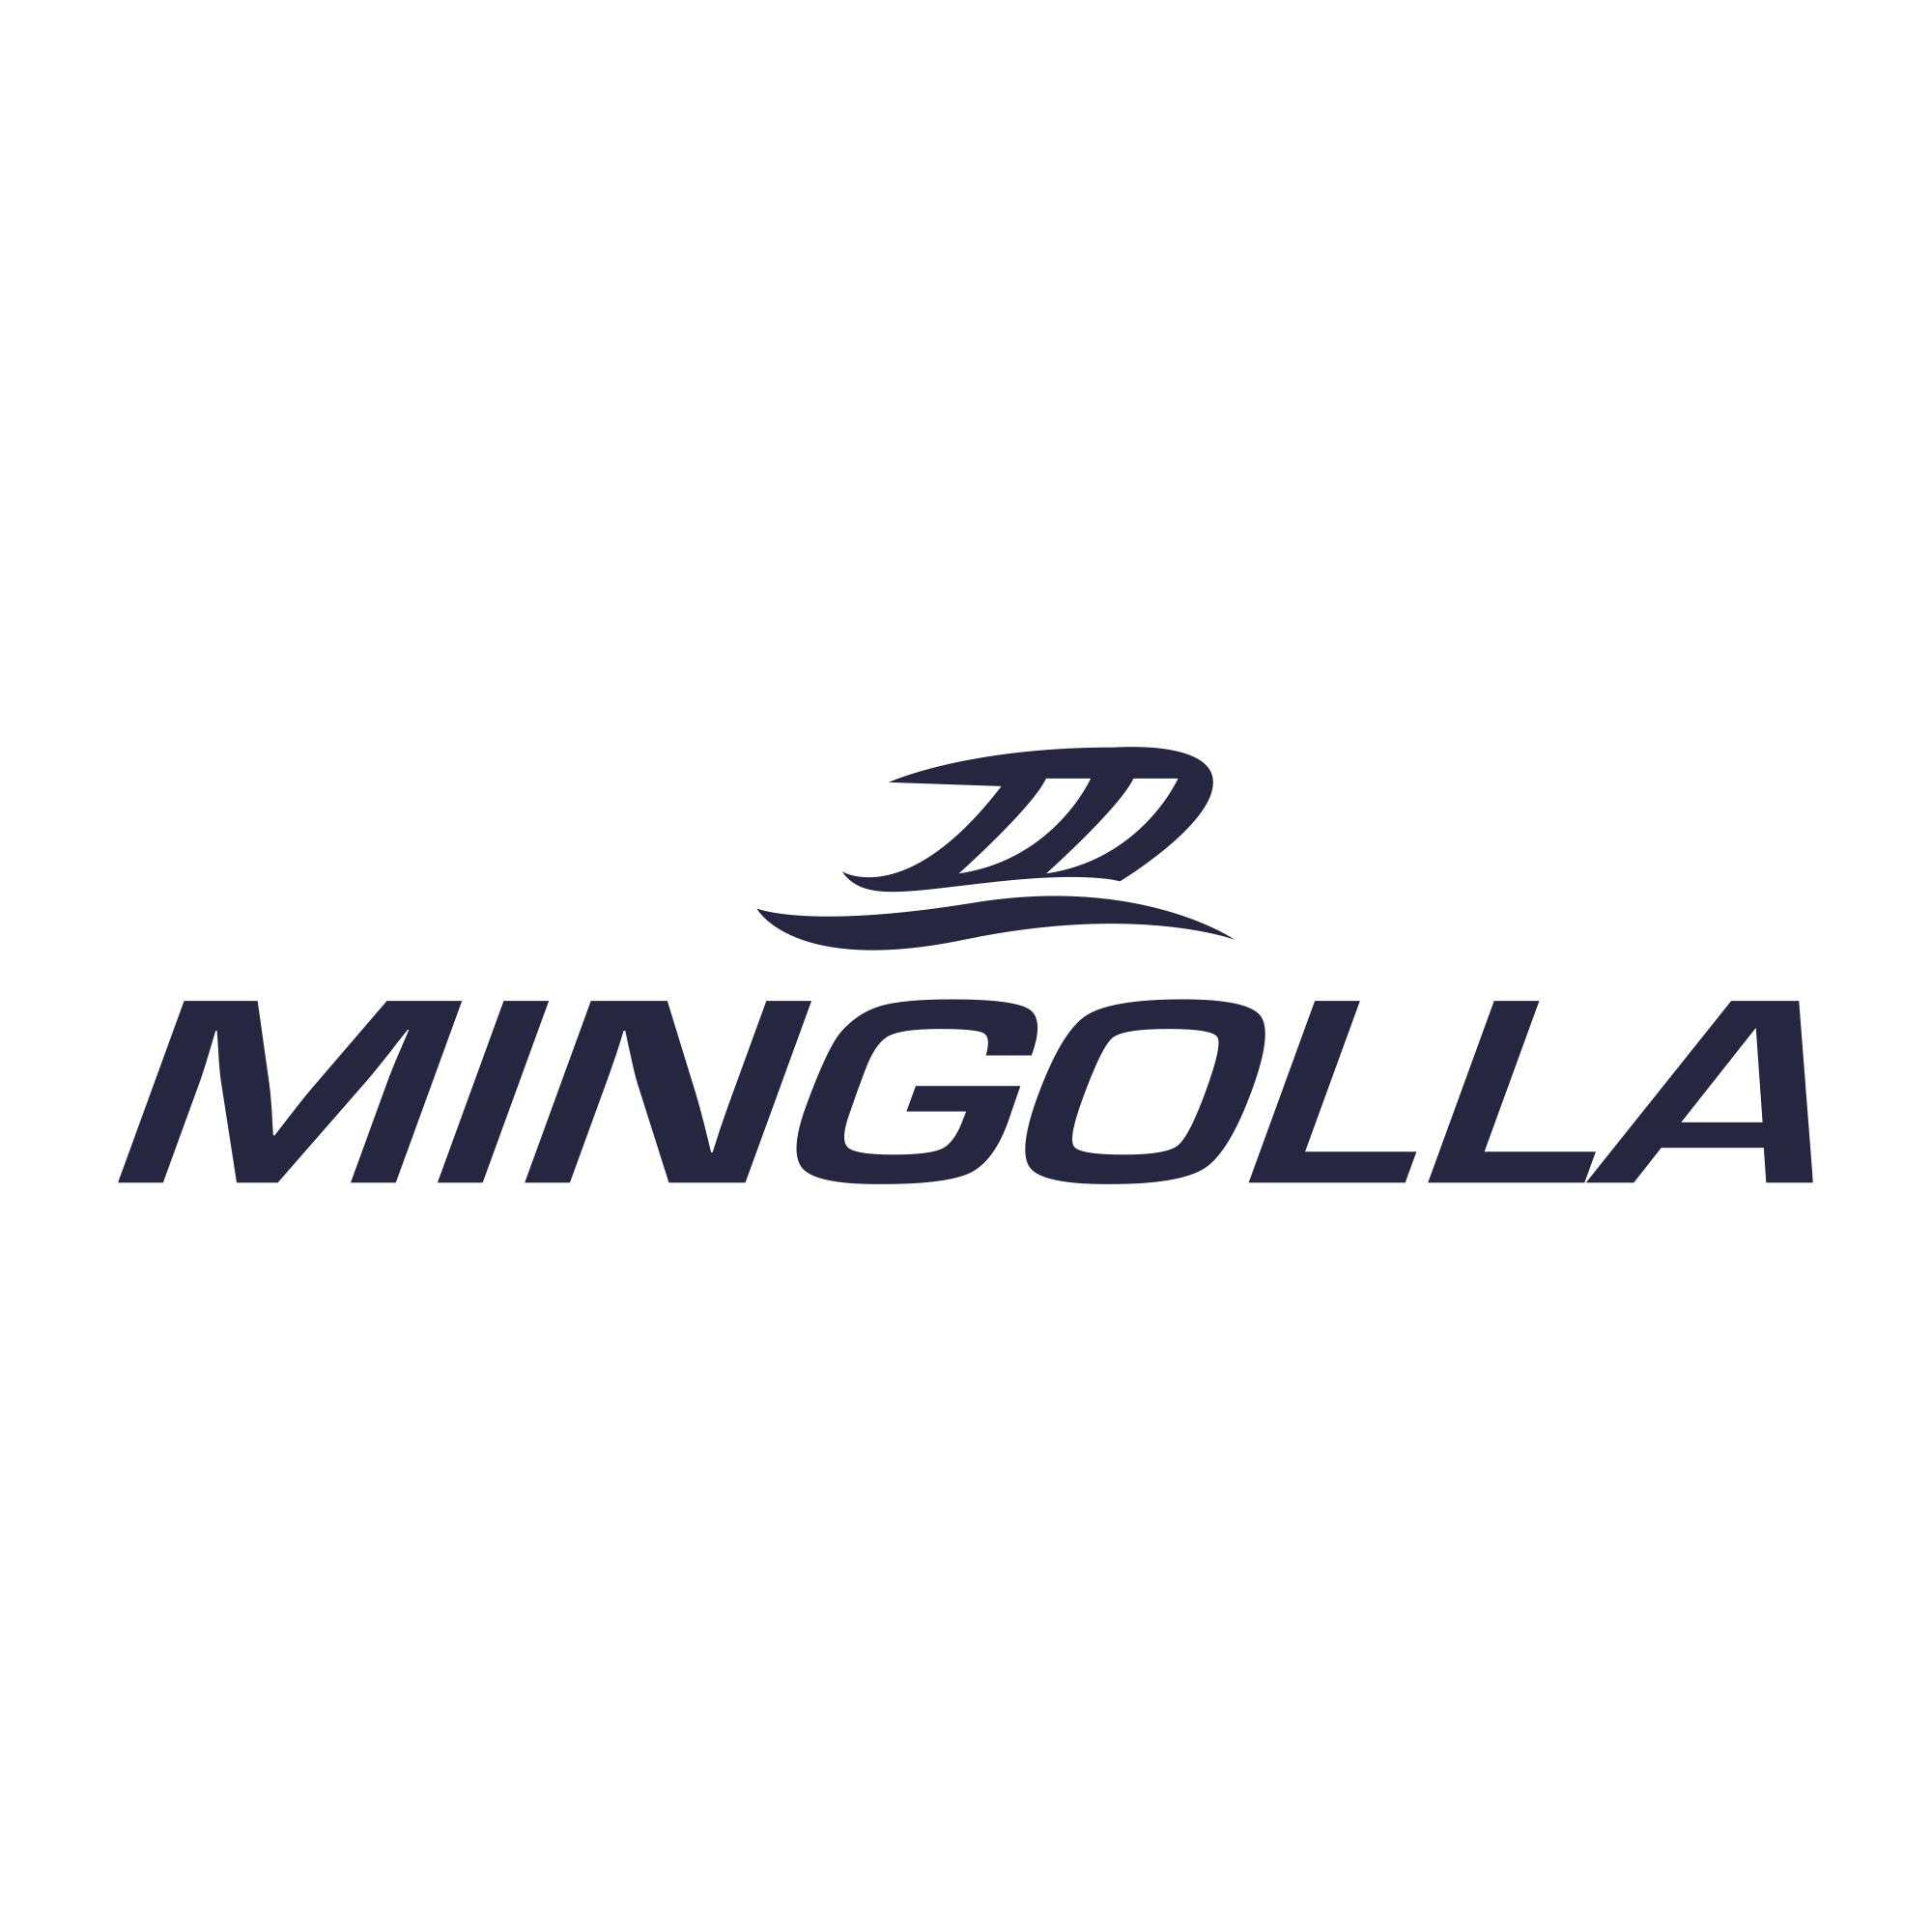 Mingolla logo